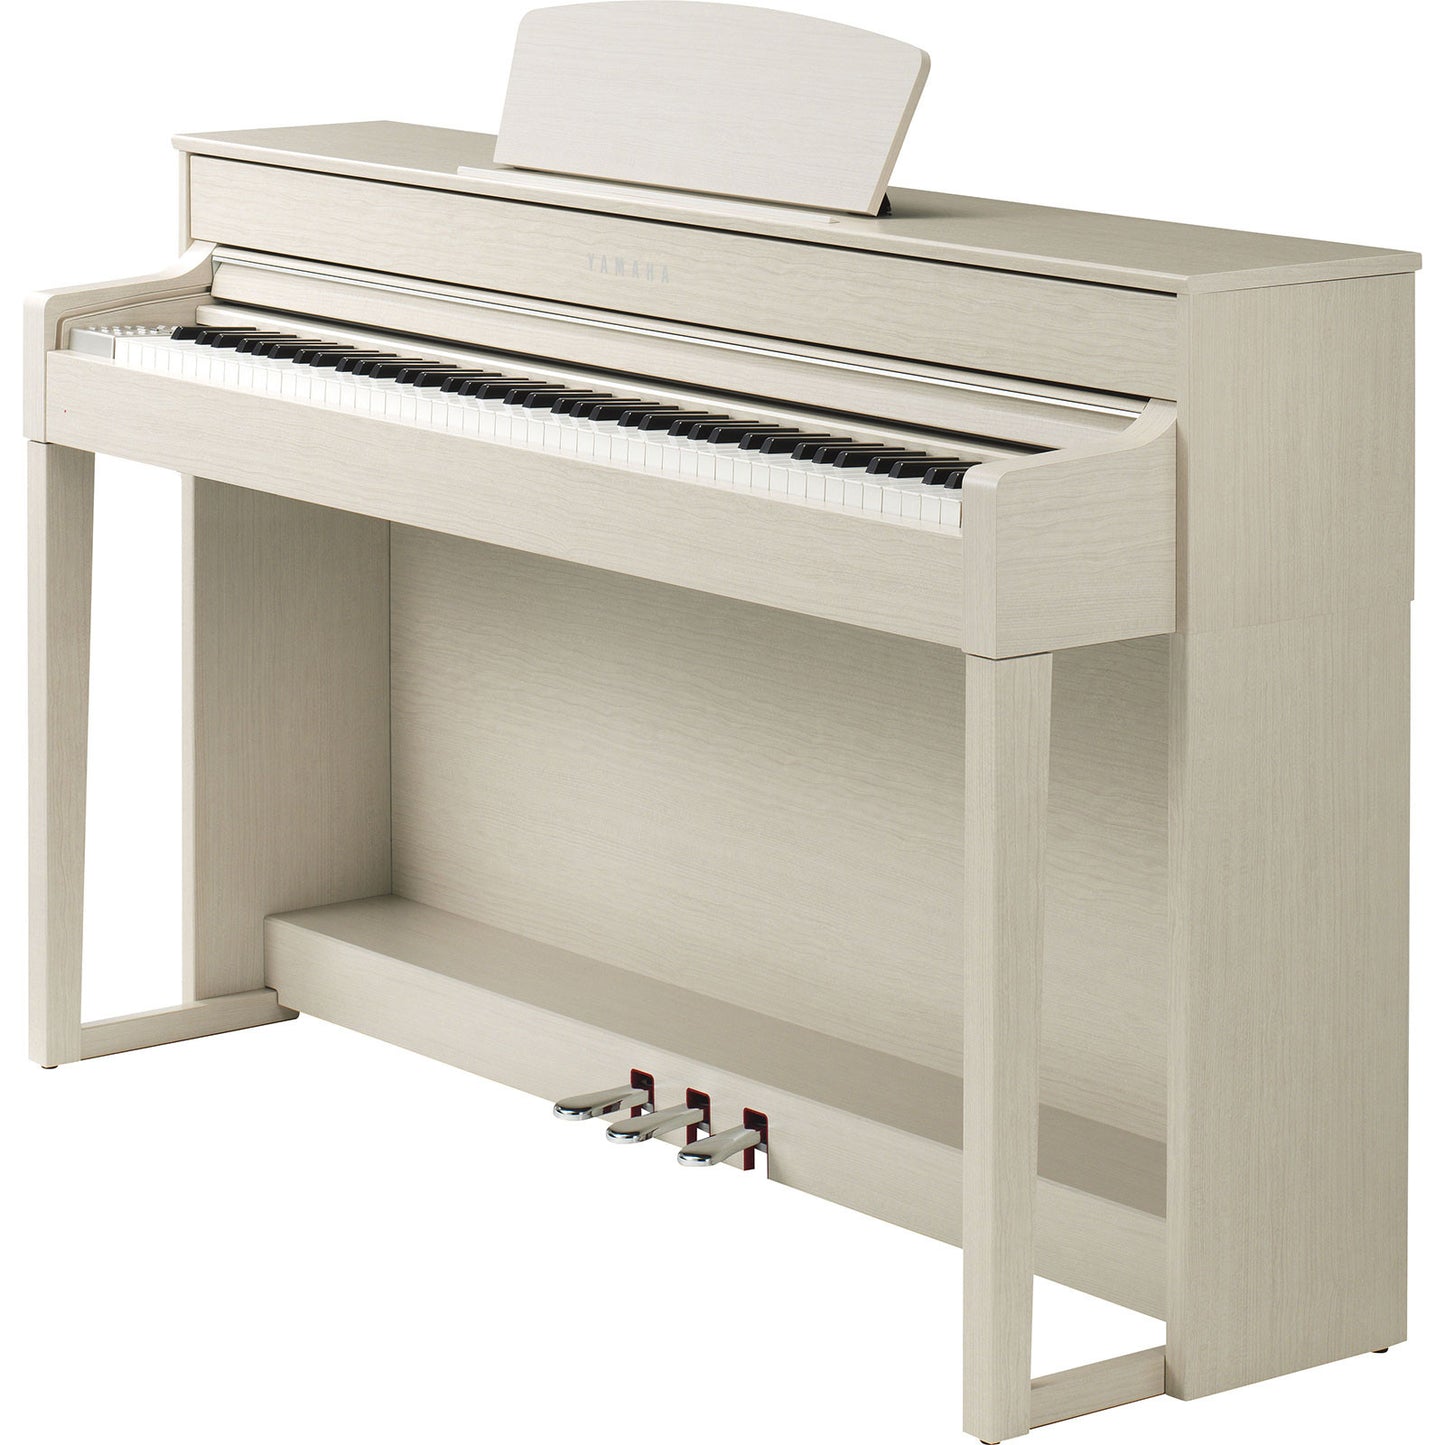 Discontinued Yamaha CLP-535 Digital Piano